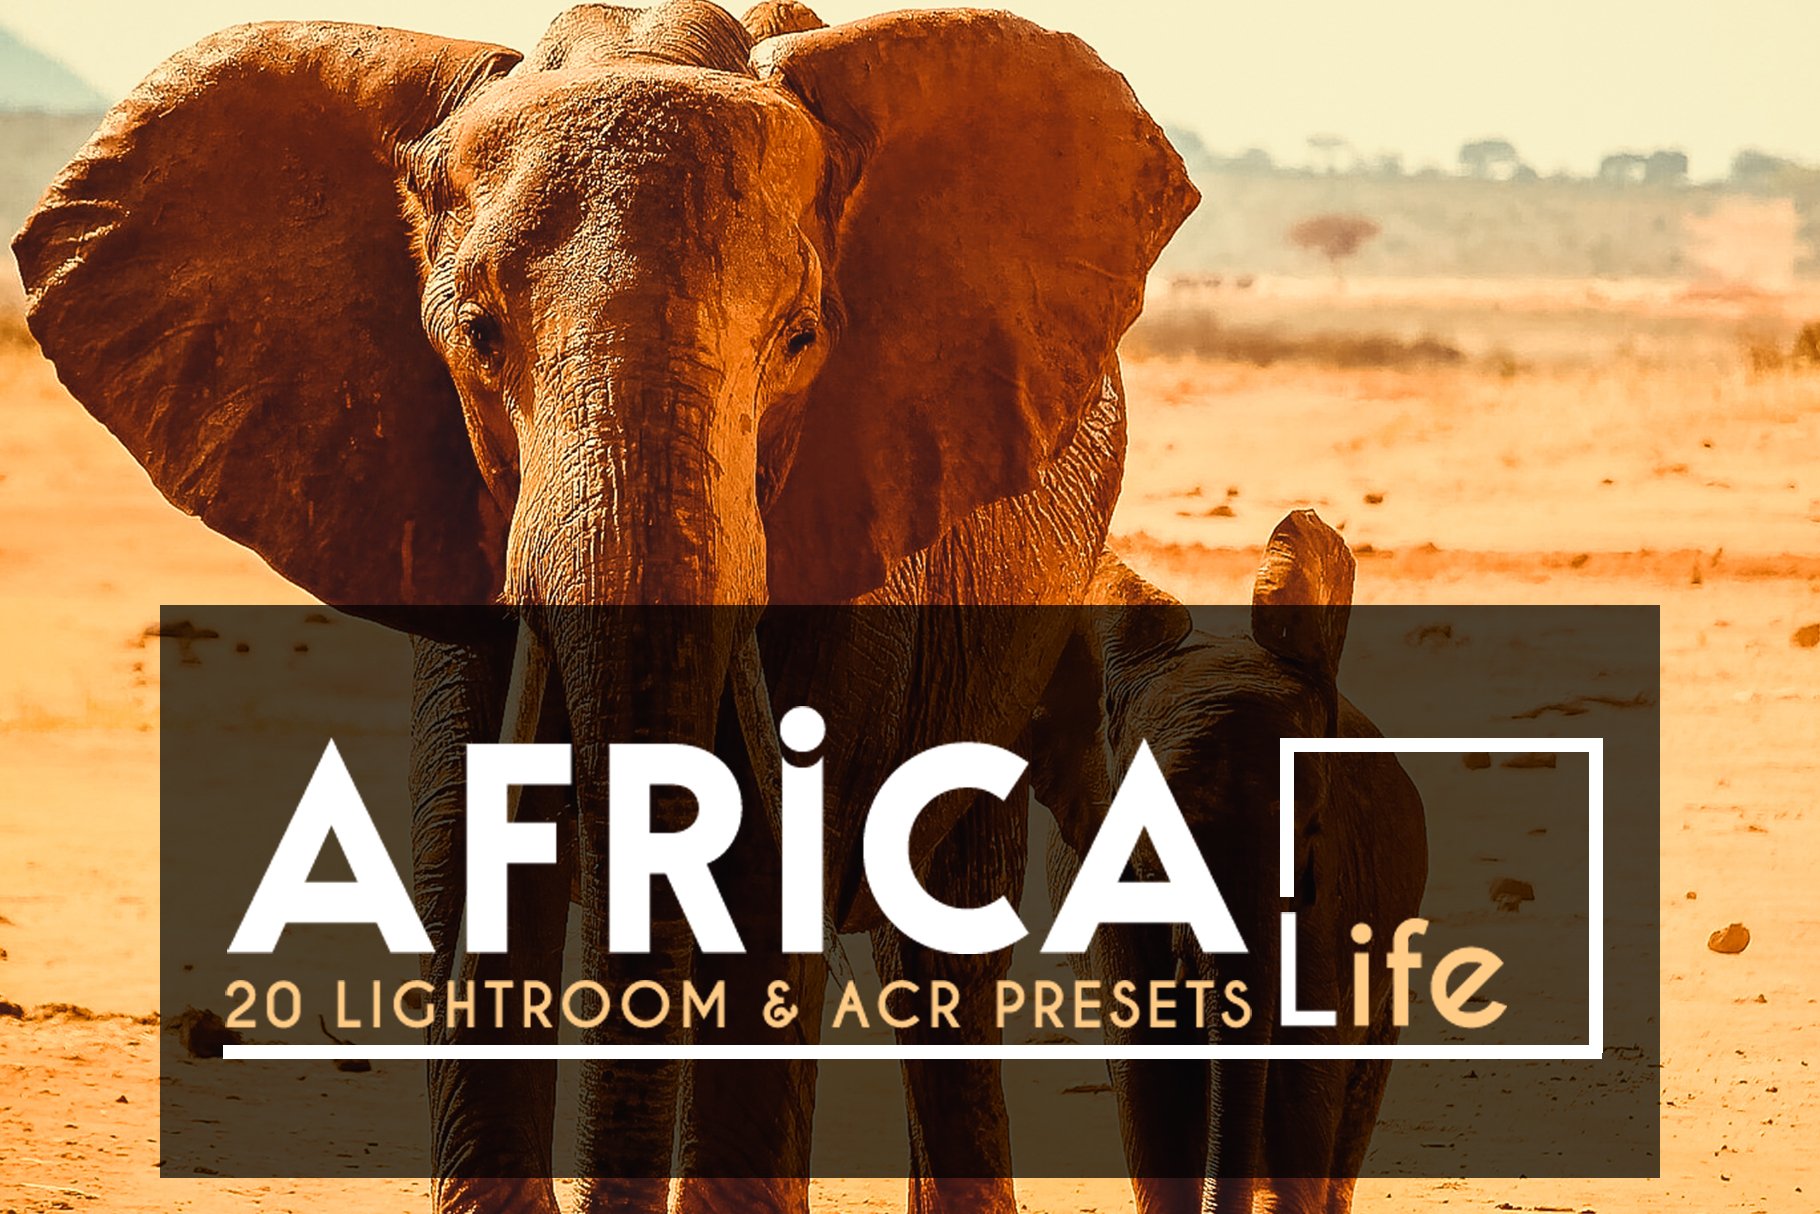 20 Africa Life Lightroom &ACR Presetcover image.